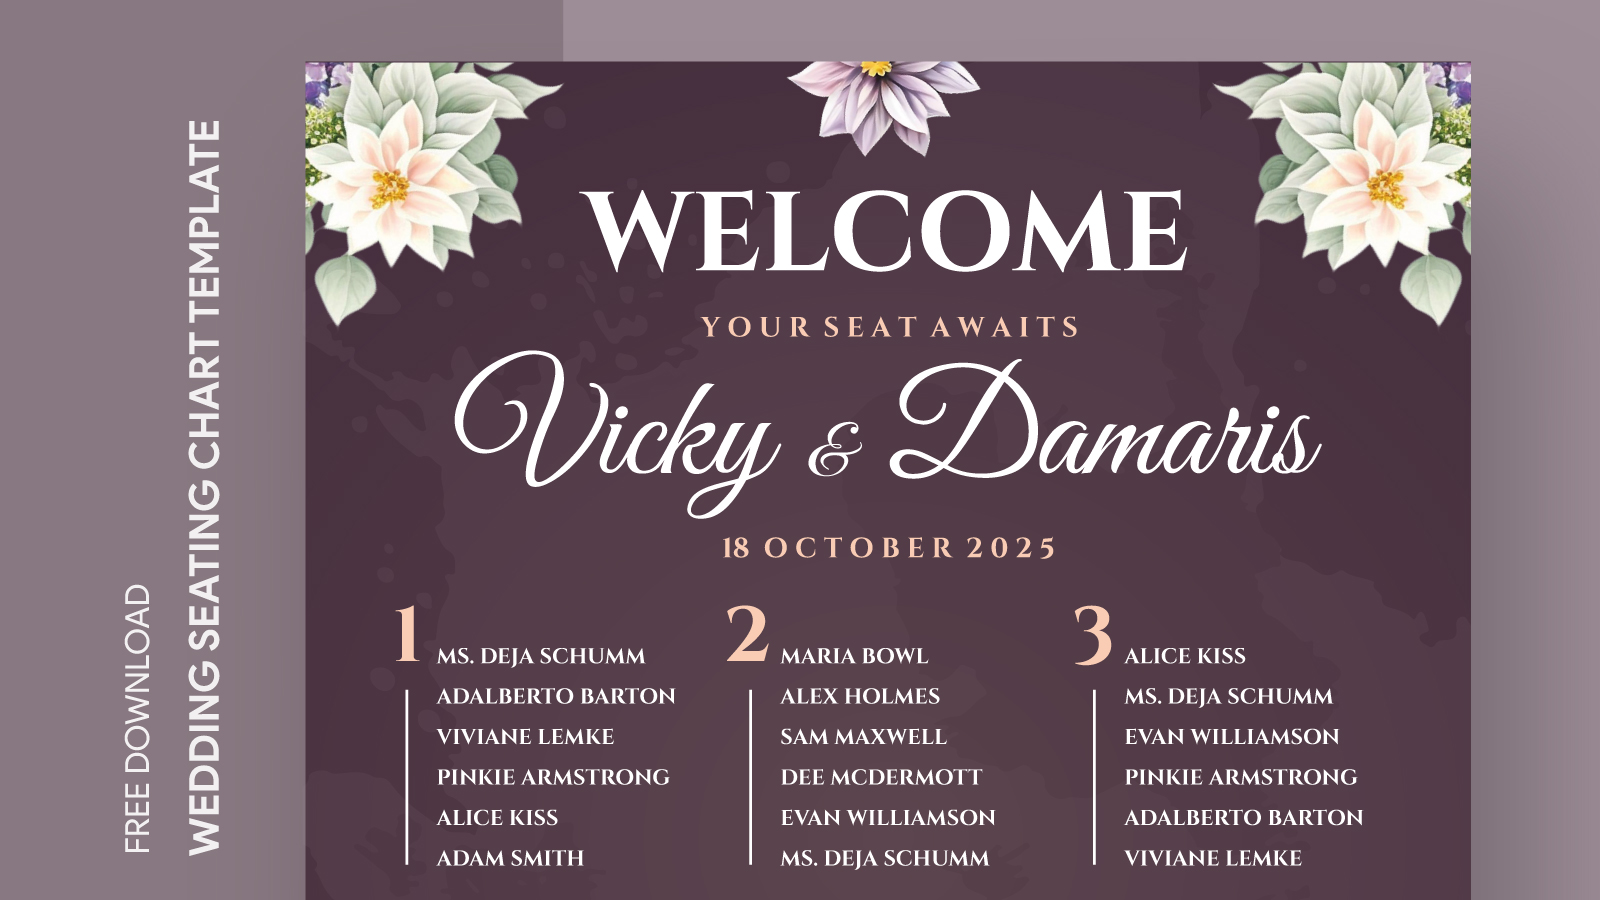 Elegant Wedding Seating Chart Free Google Docs Template - gdoc.io